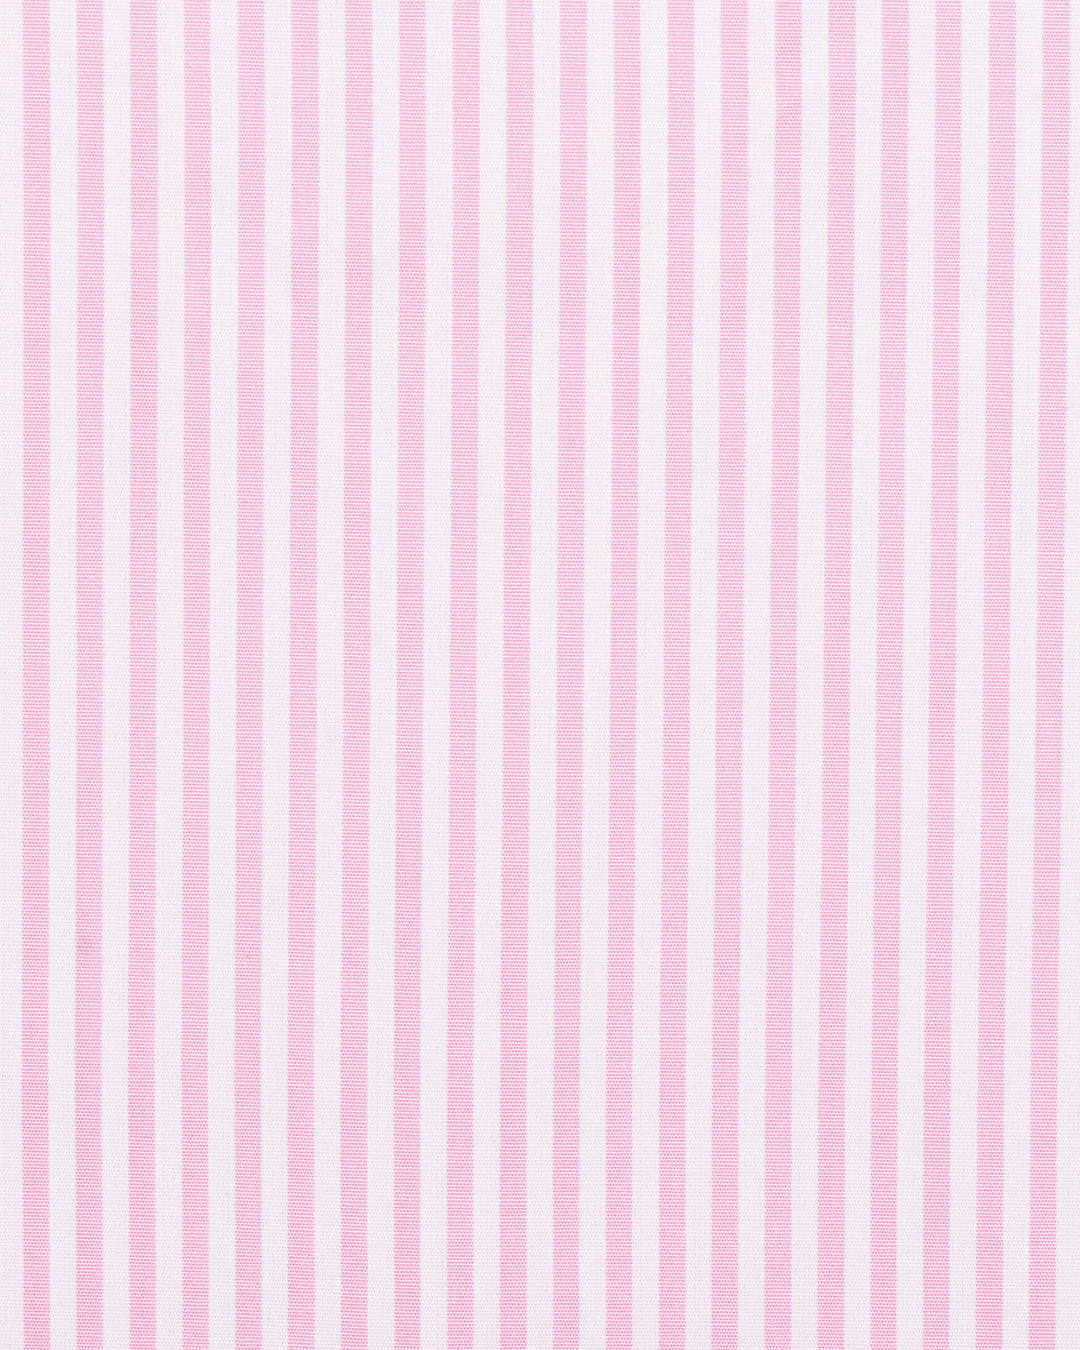 Pink Dress Stripes On White Shirt